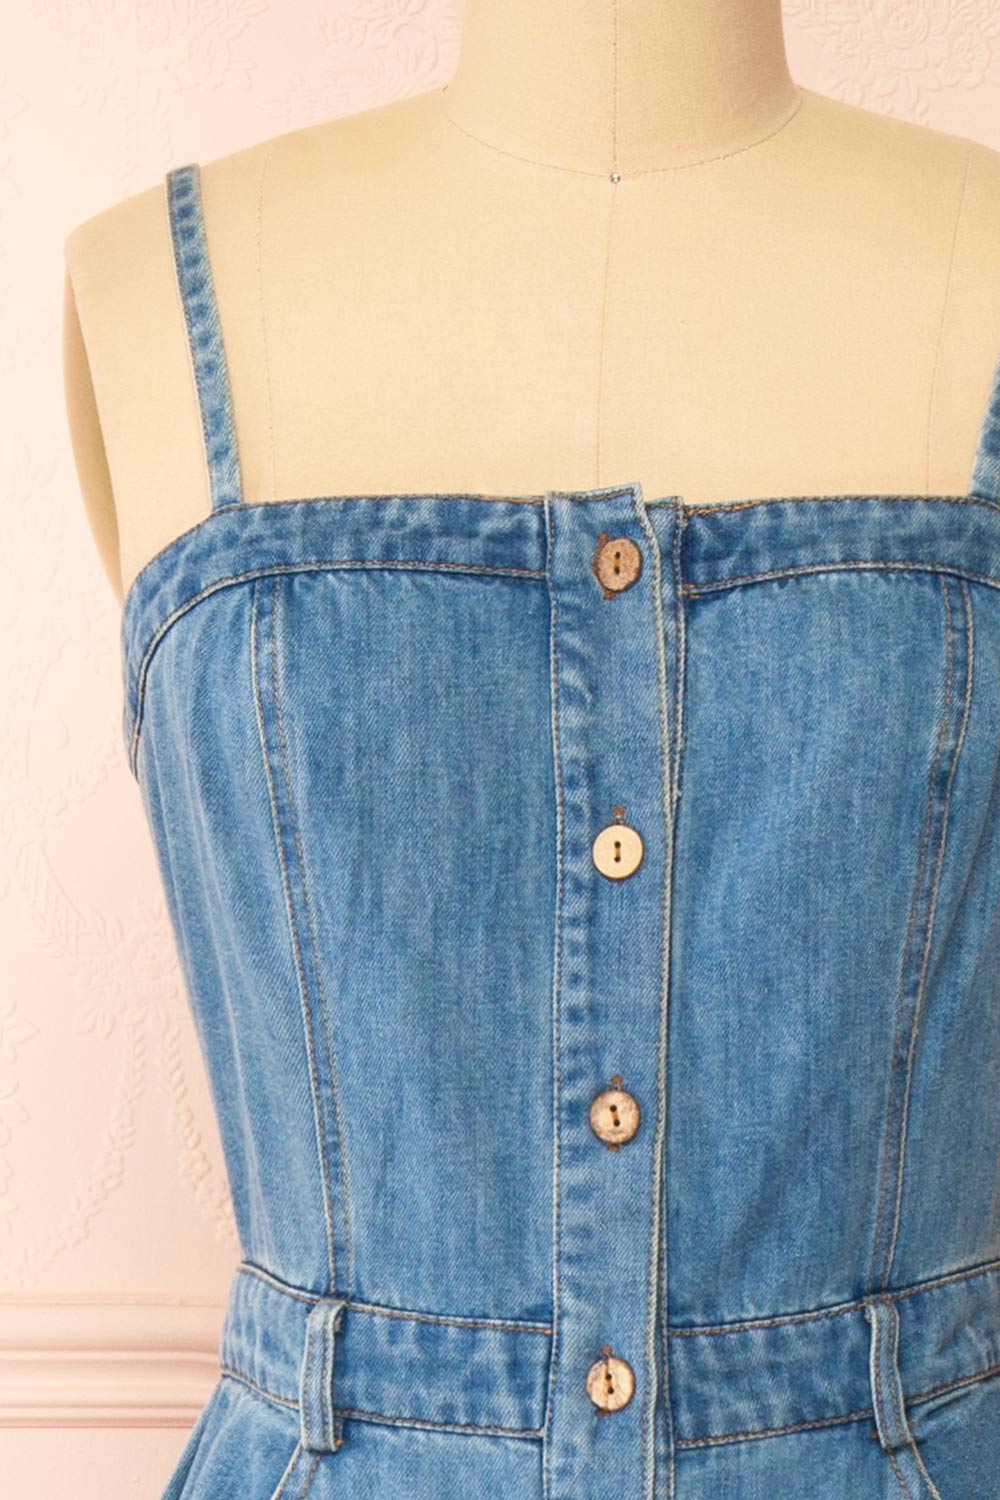 Moprina Long Blue Denim Dress w/ Pockets | Boutique 1861 front